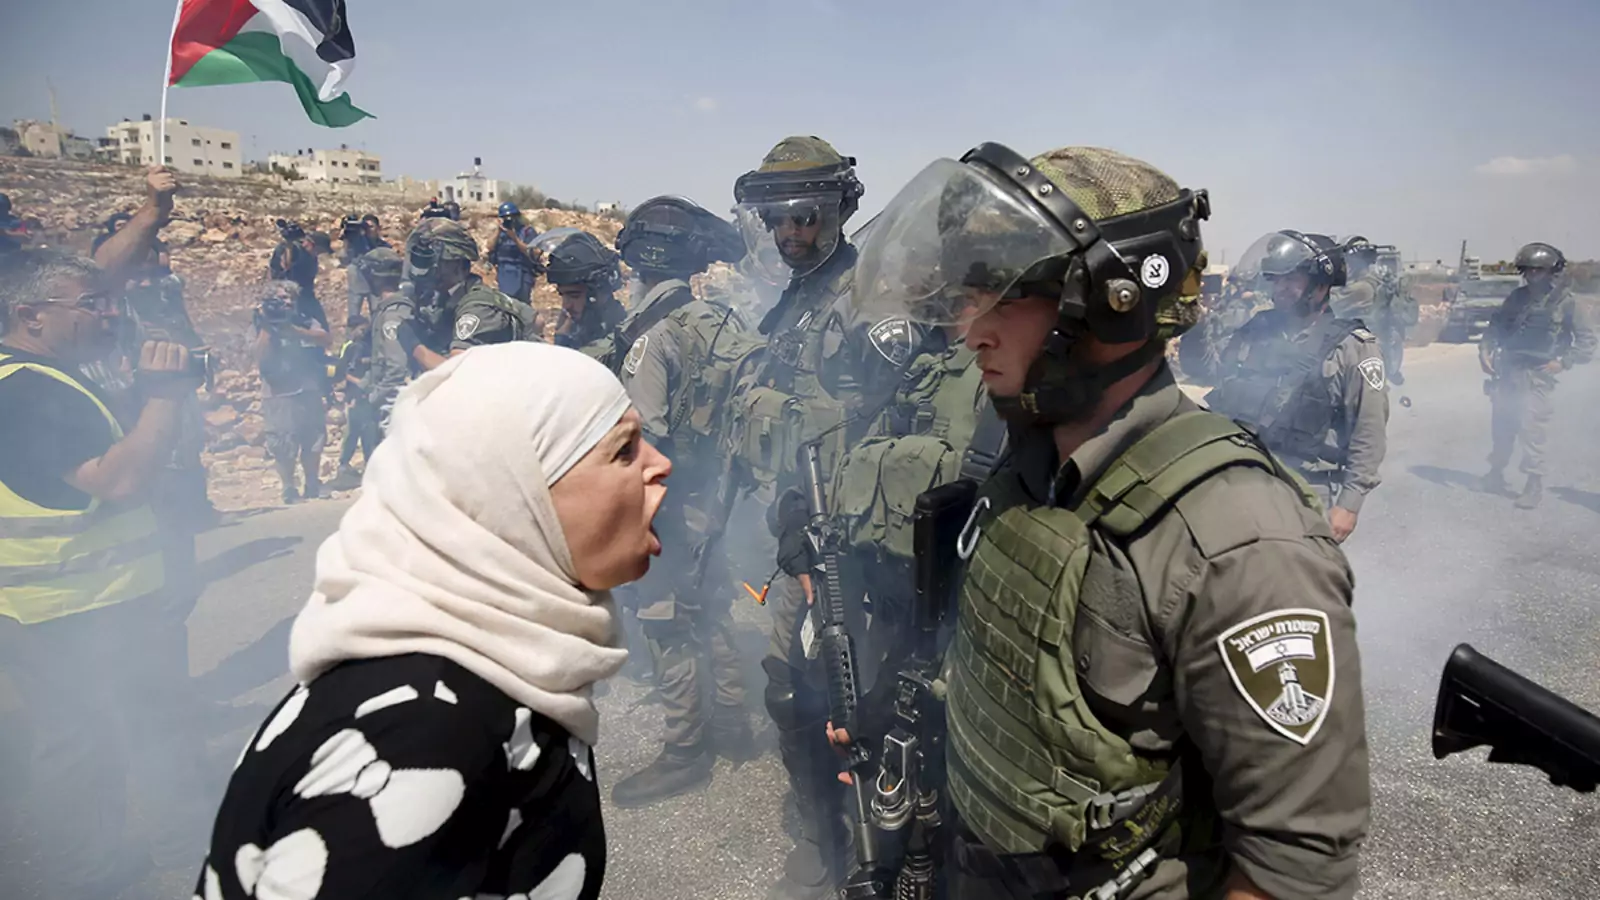 A Palestinian woman argues